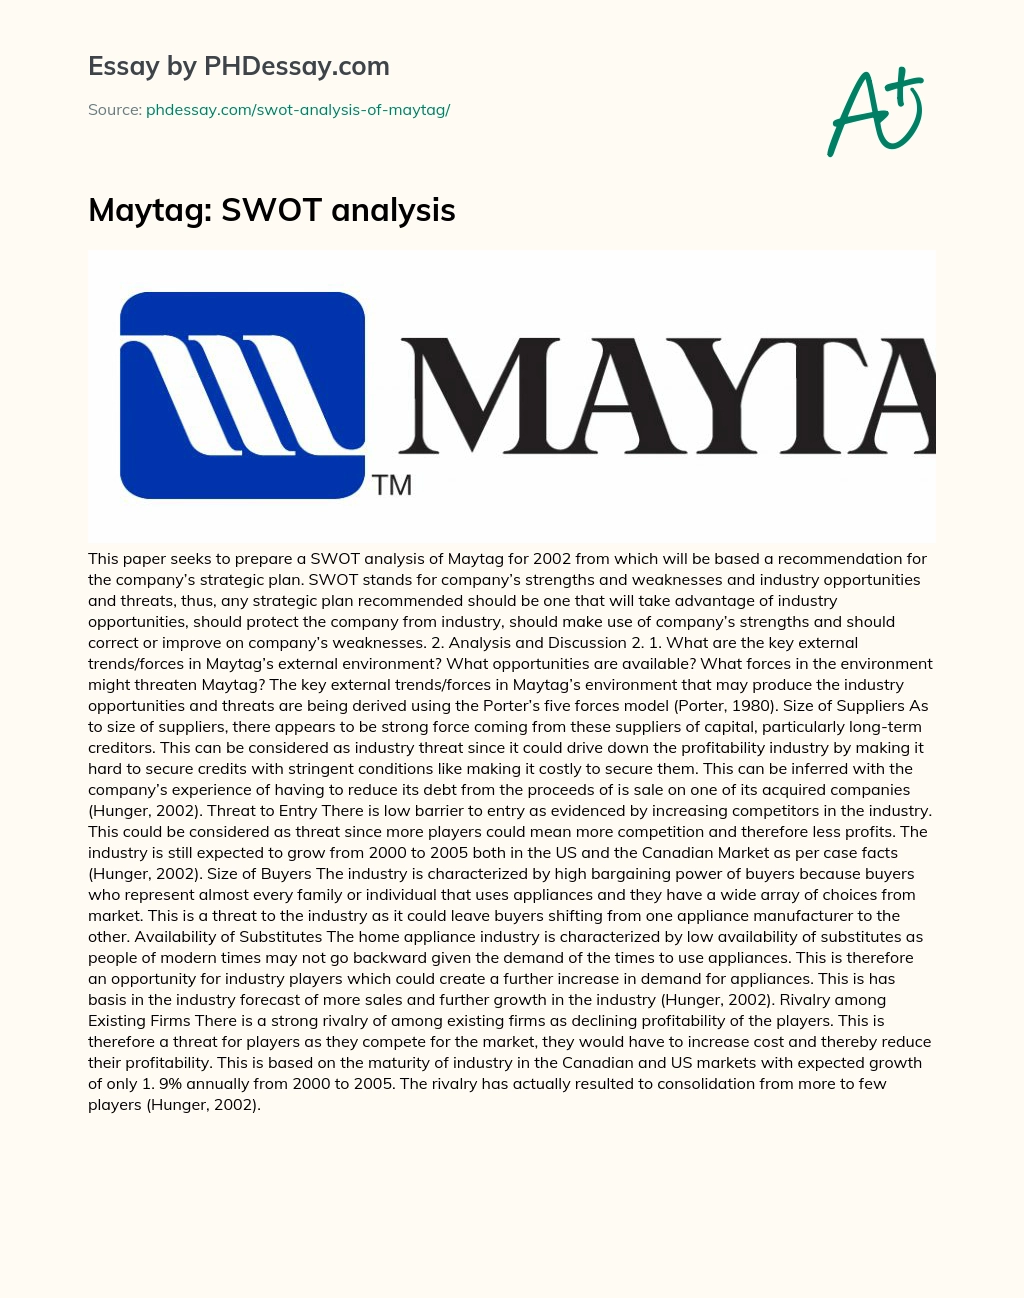 Maytag: SWOT analysis essay